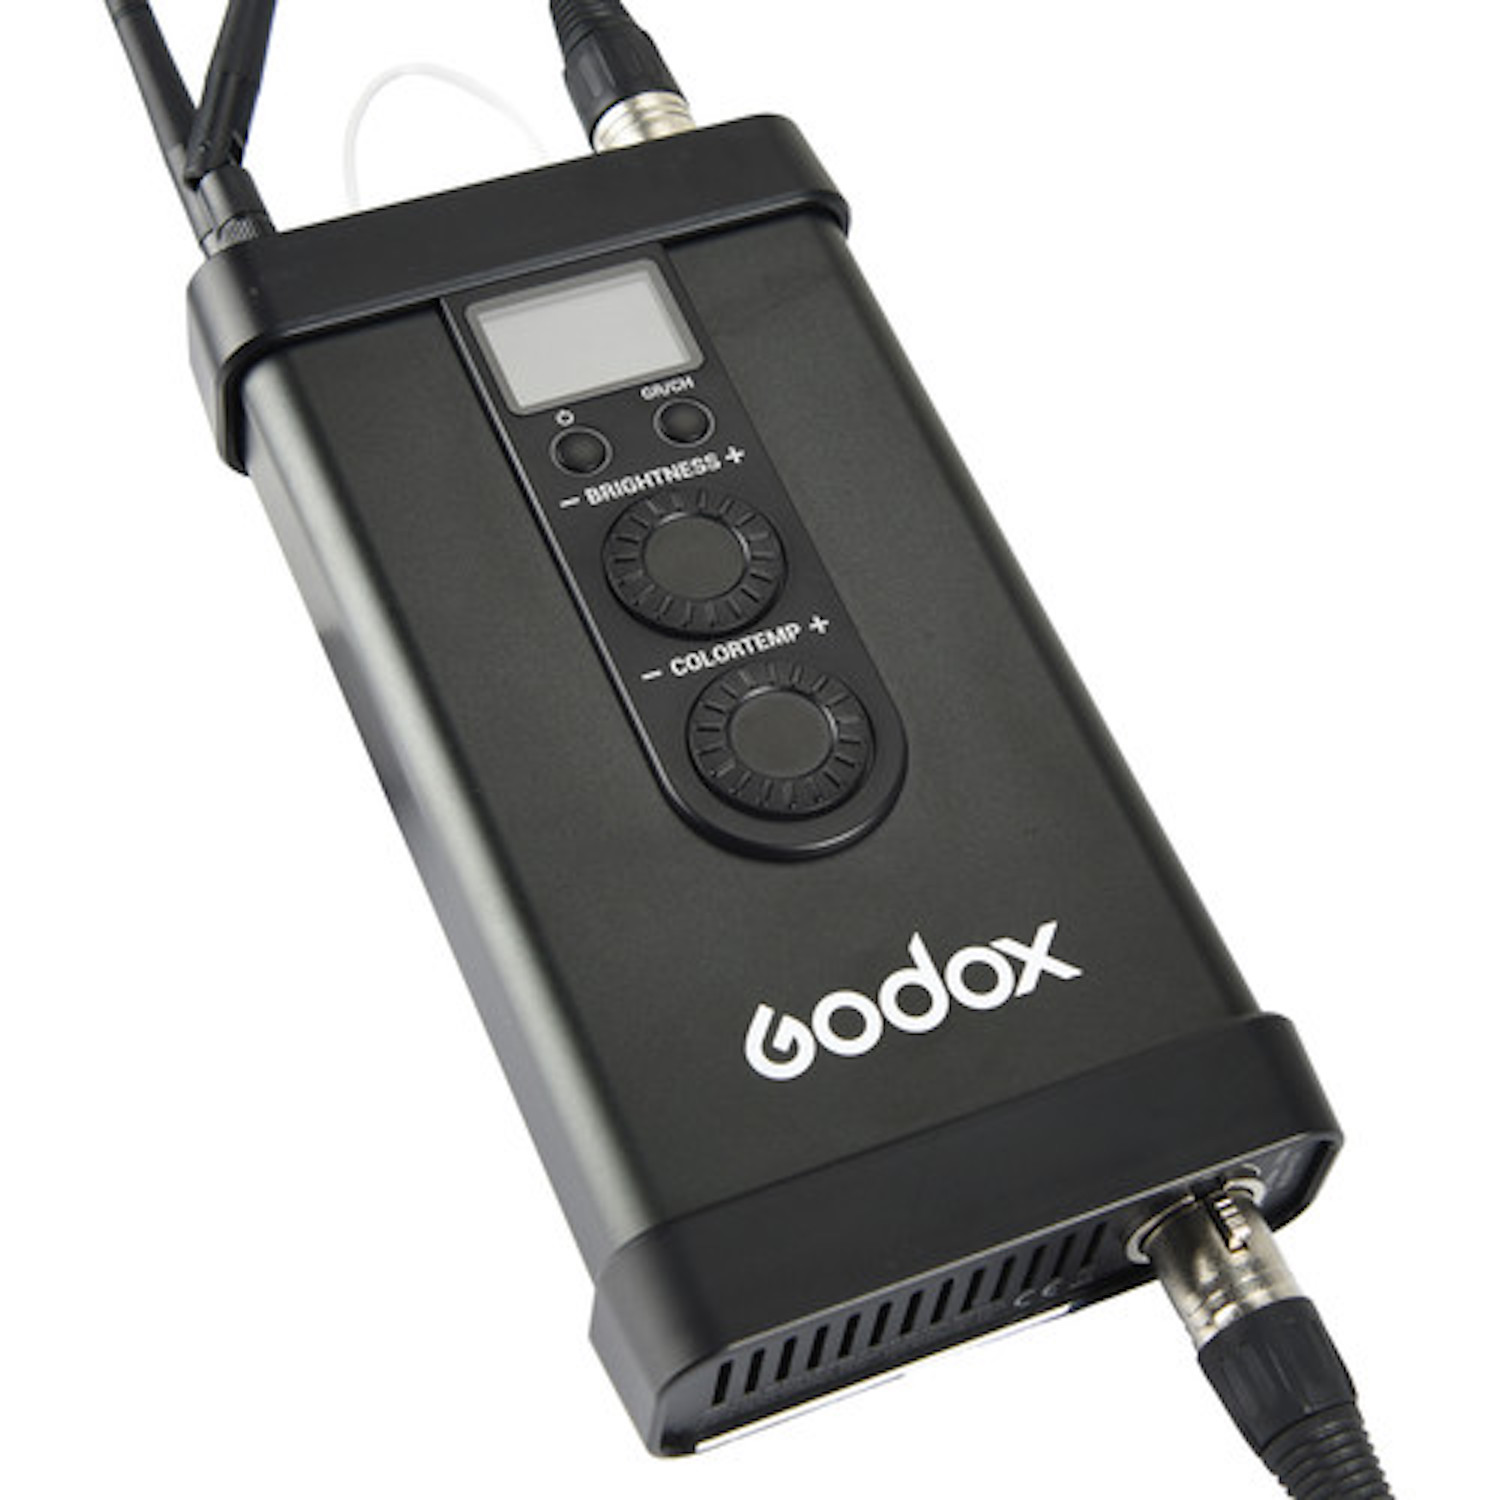 GODOX LED (30x120cm) Flexibel Light